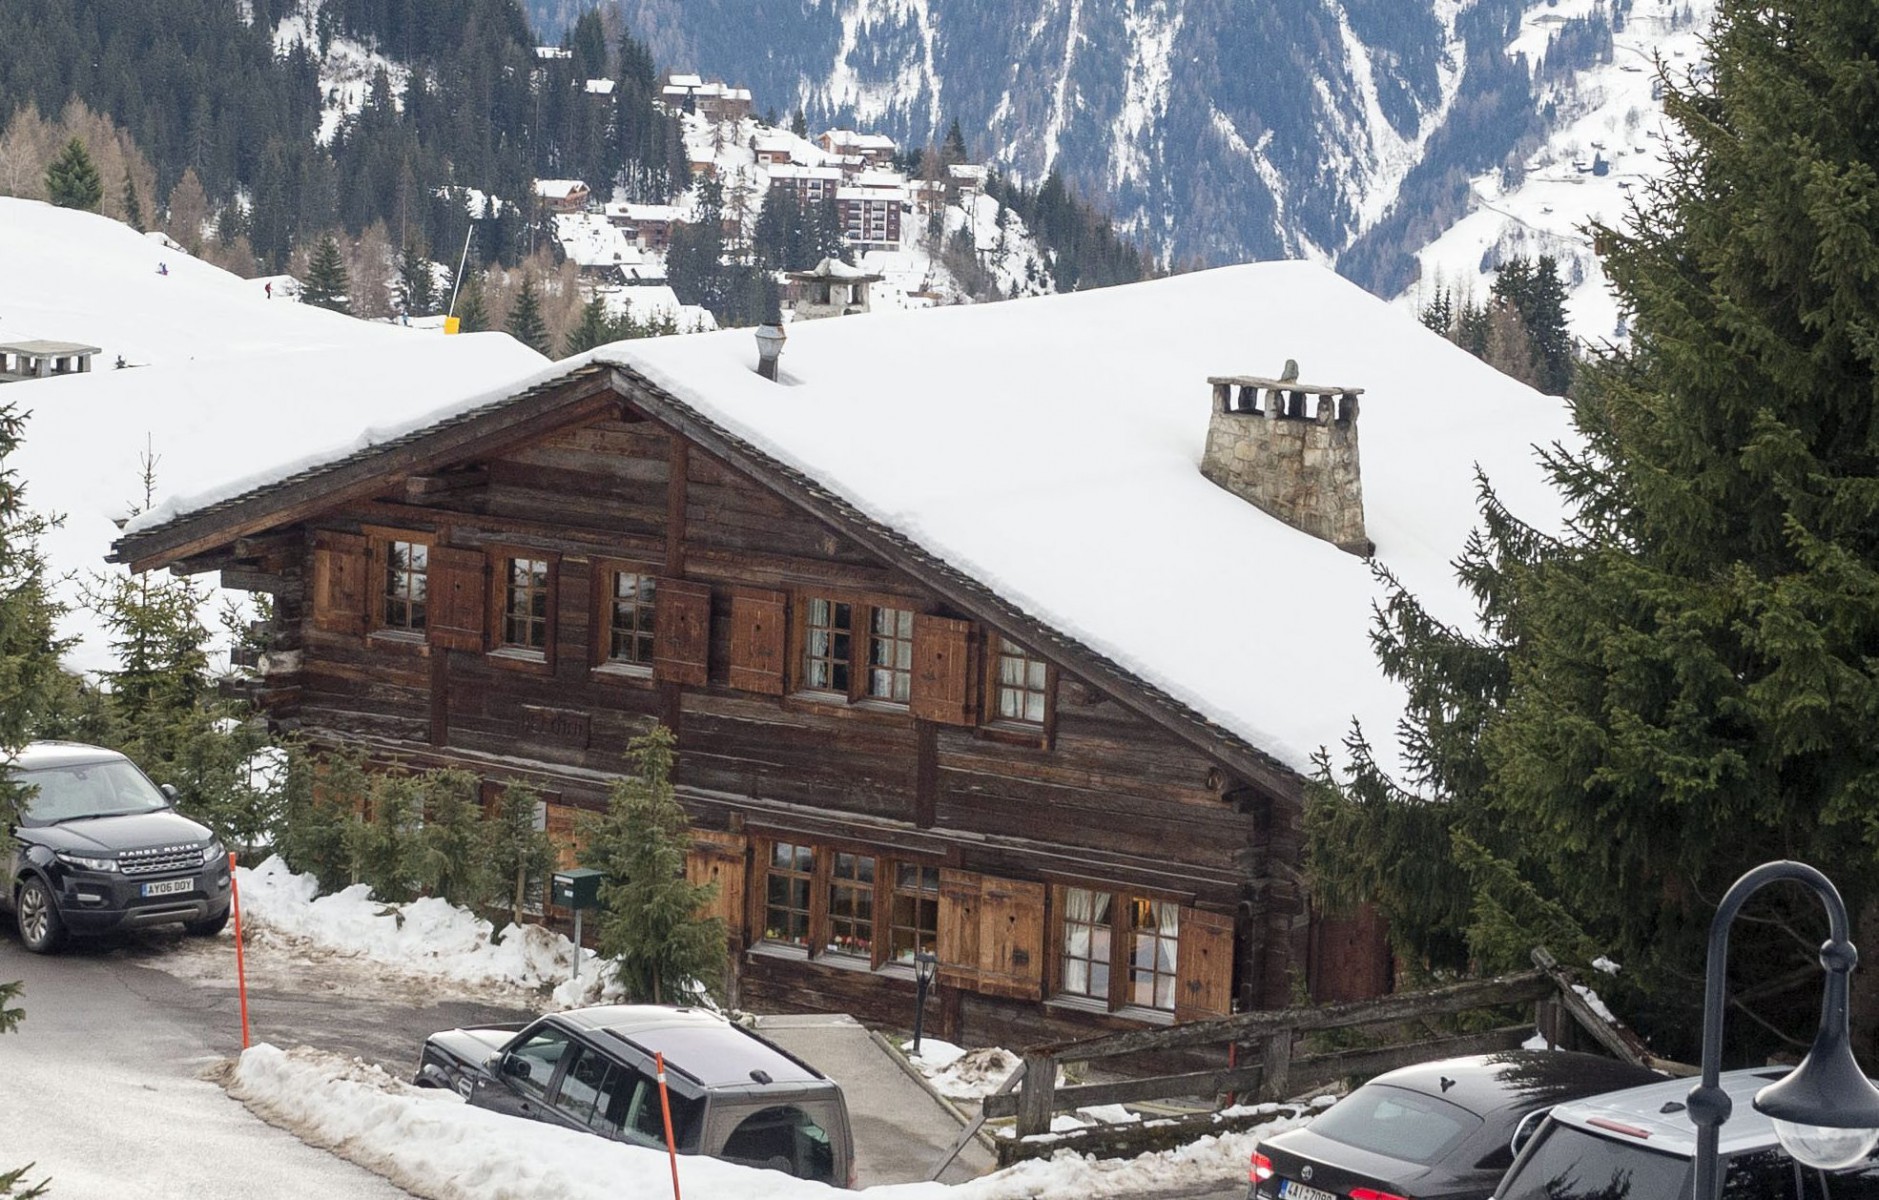 Andrew bought Chalet Helora in top Swiss ski resort Verbier for 13million in 2014